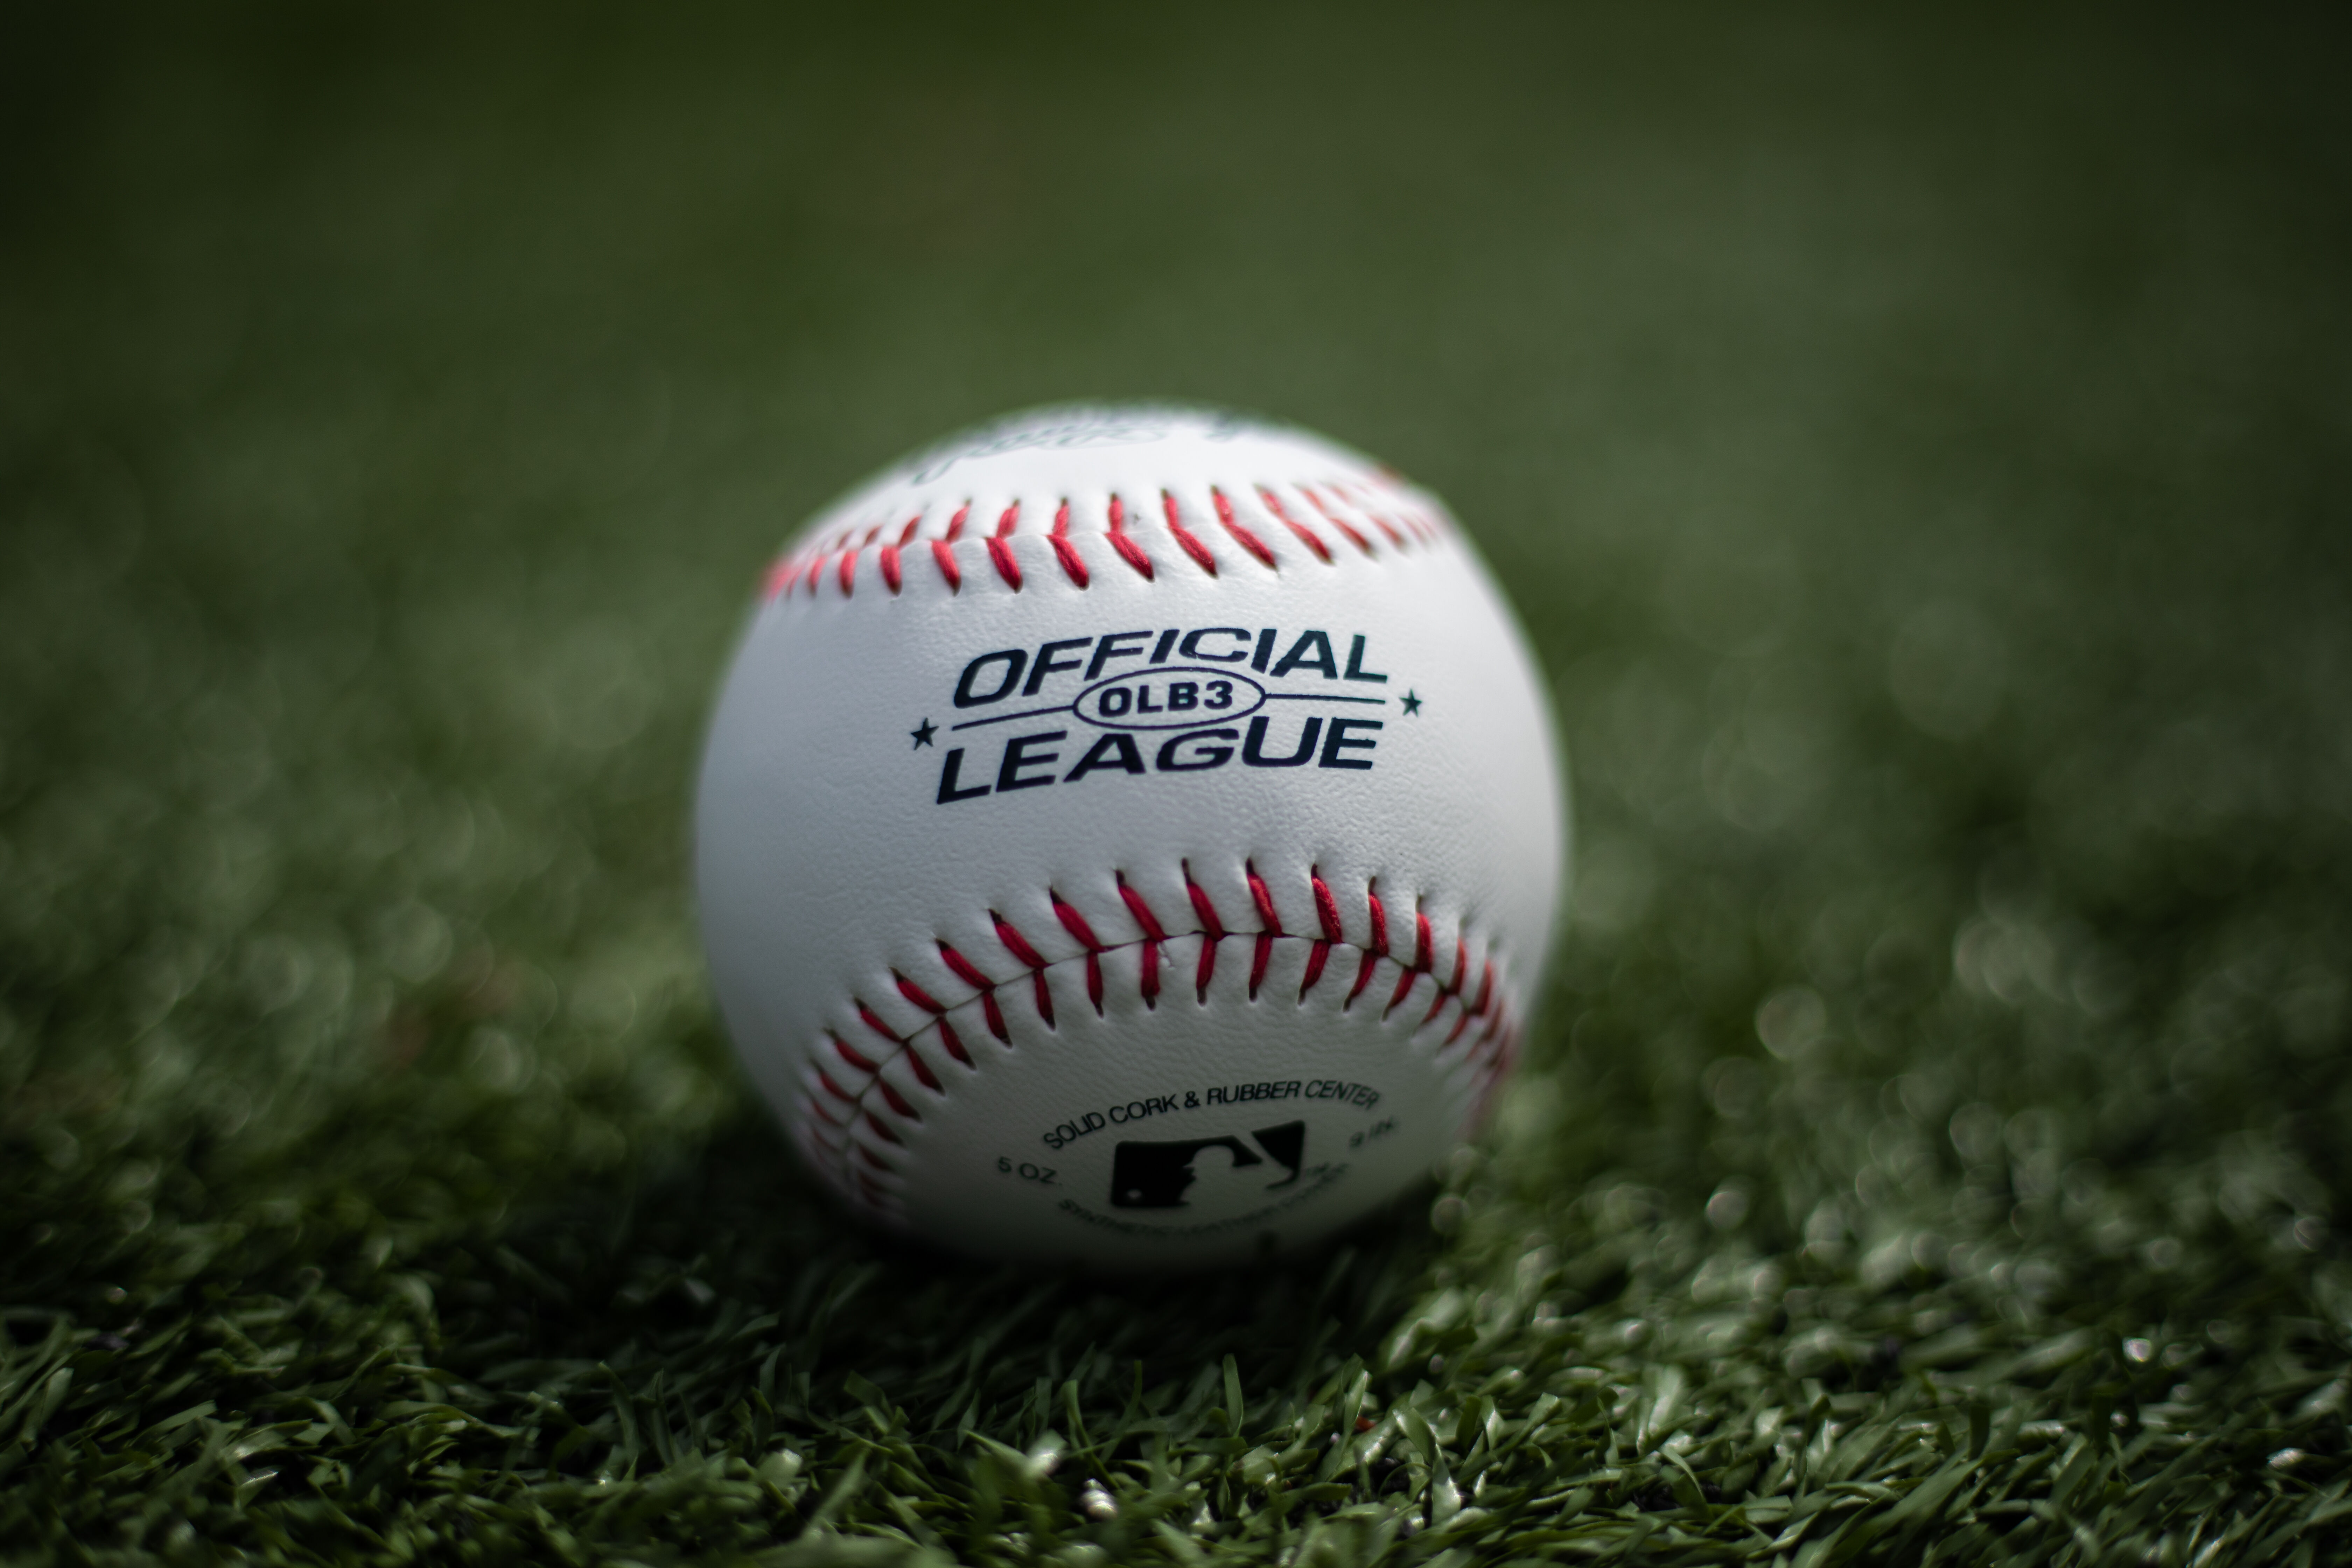 Official League Recreational Baseballs